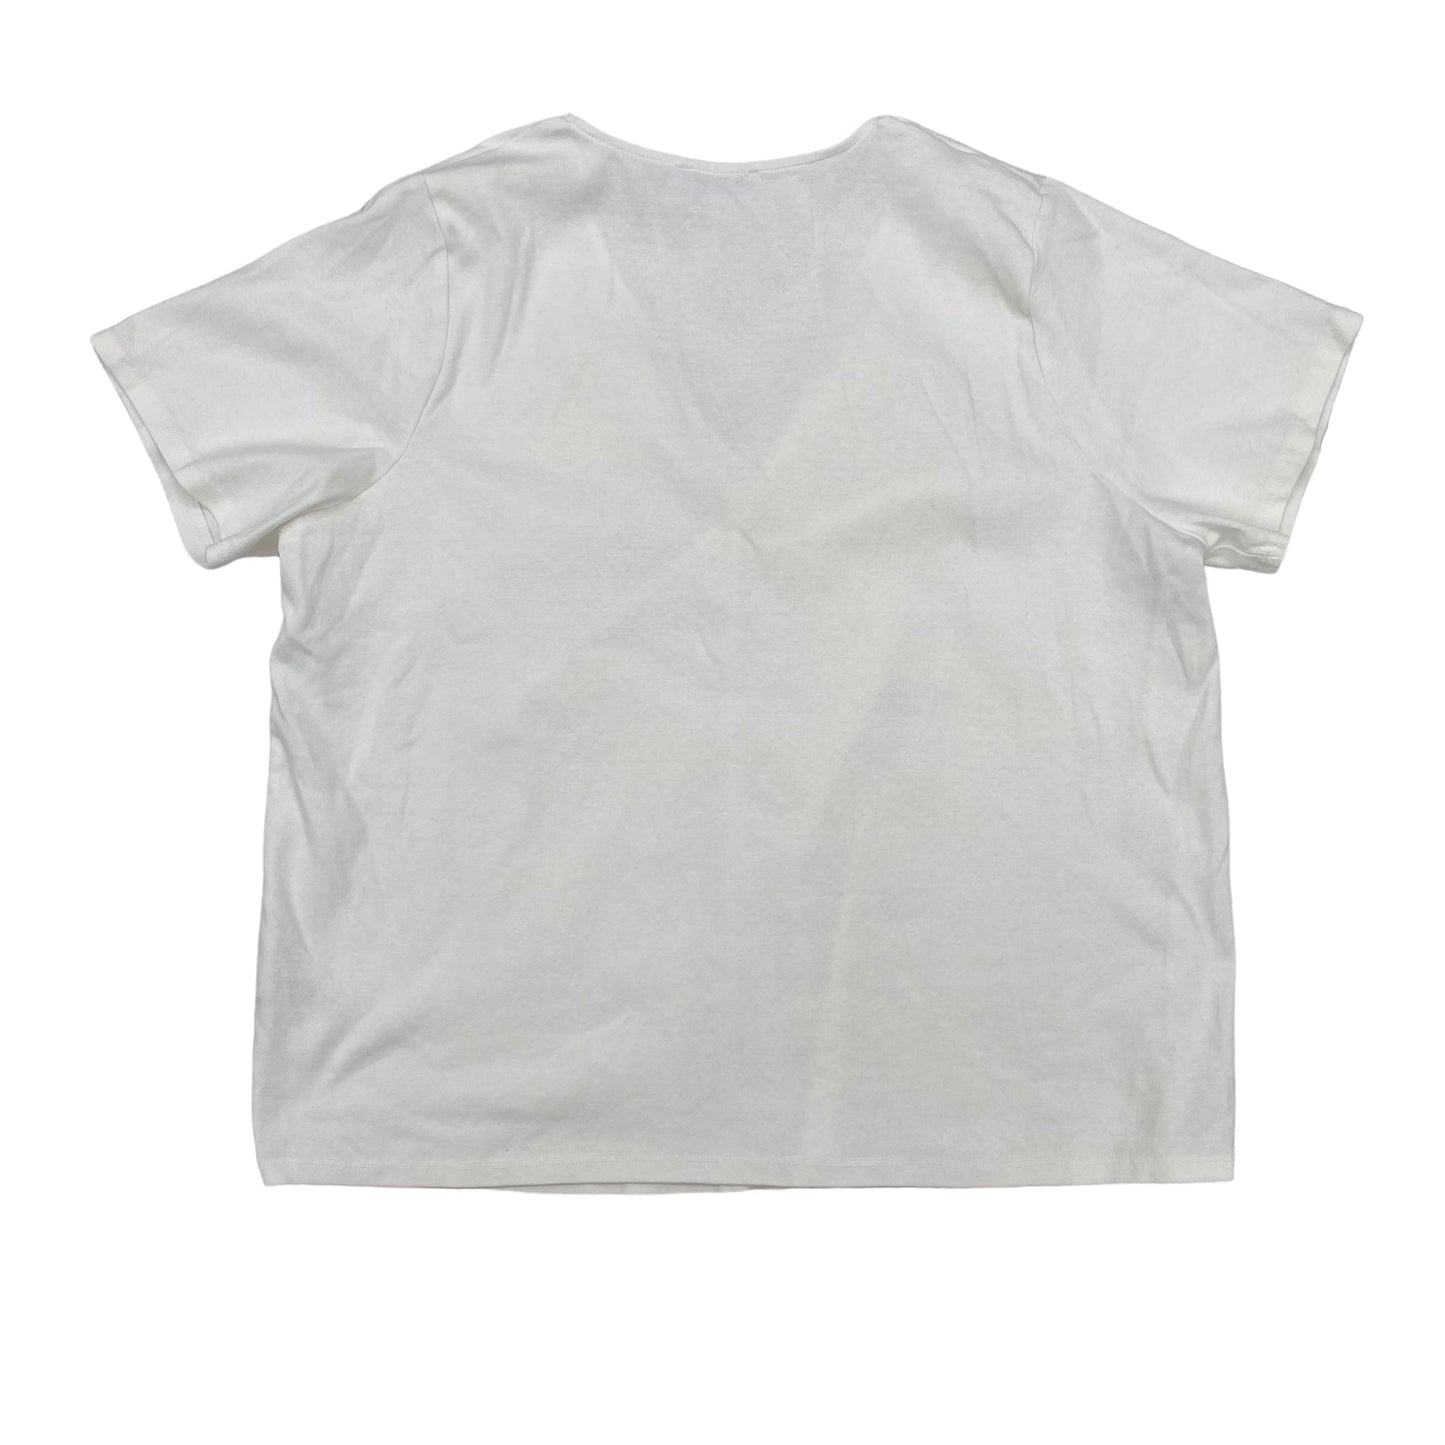 White Top Short Sleeve Basic Calvin Klein, Size 1x